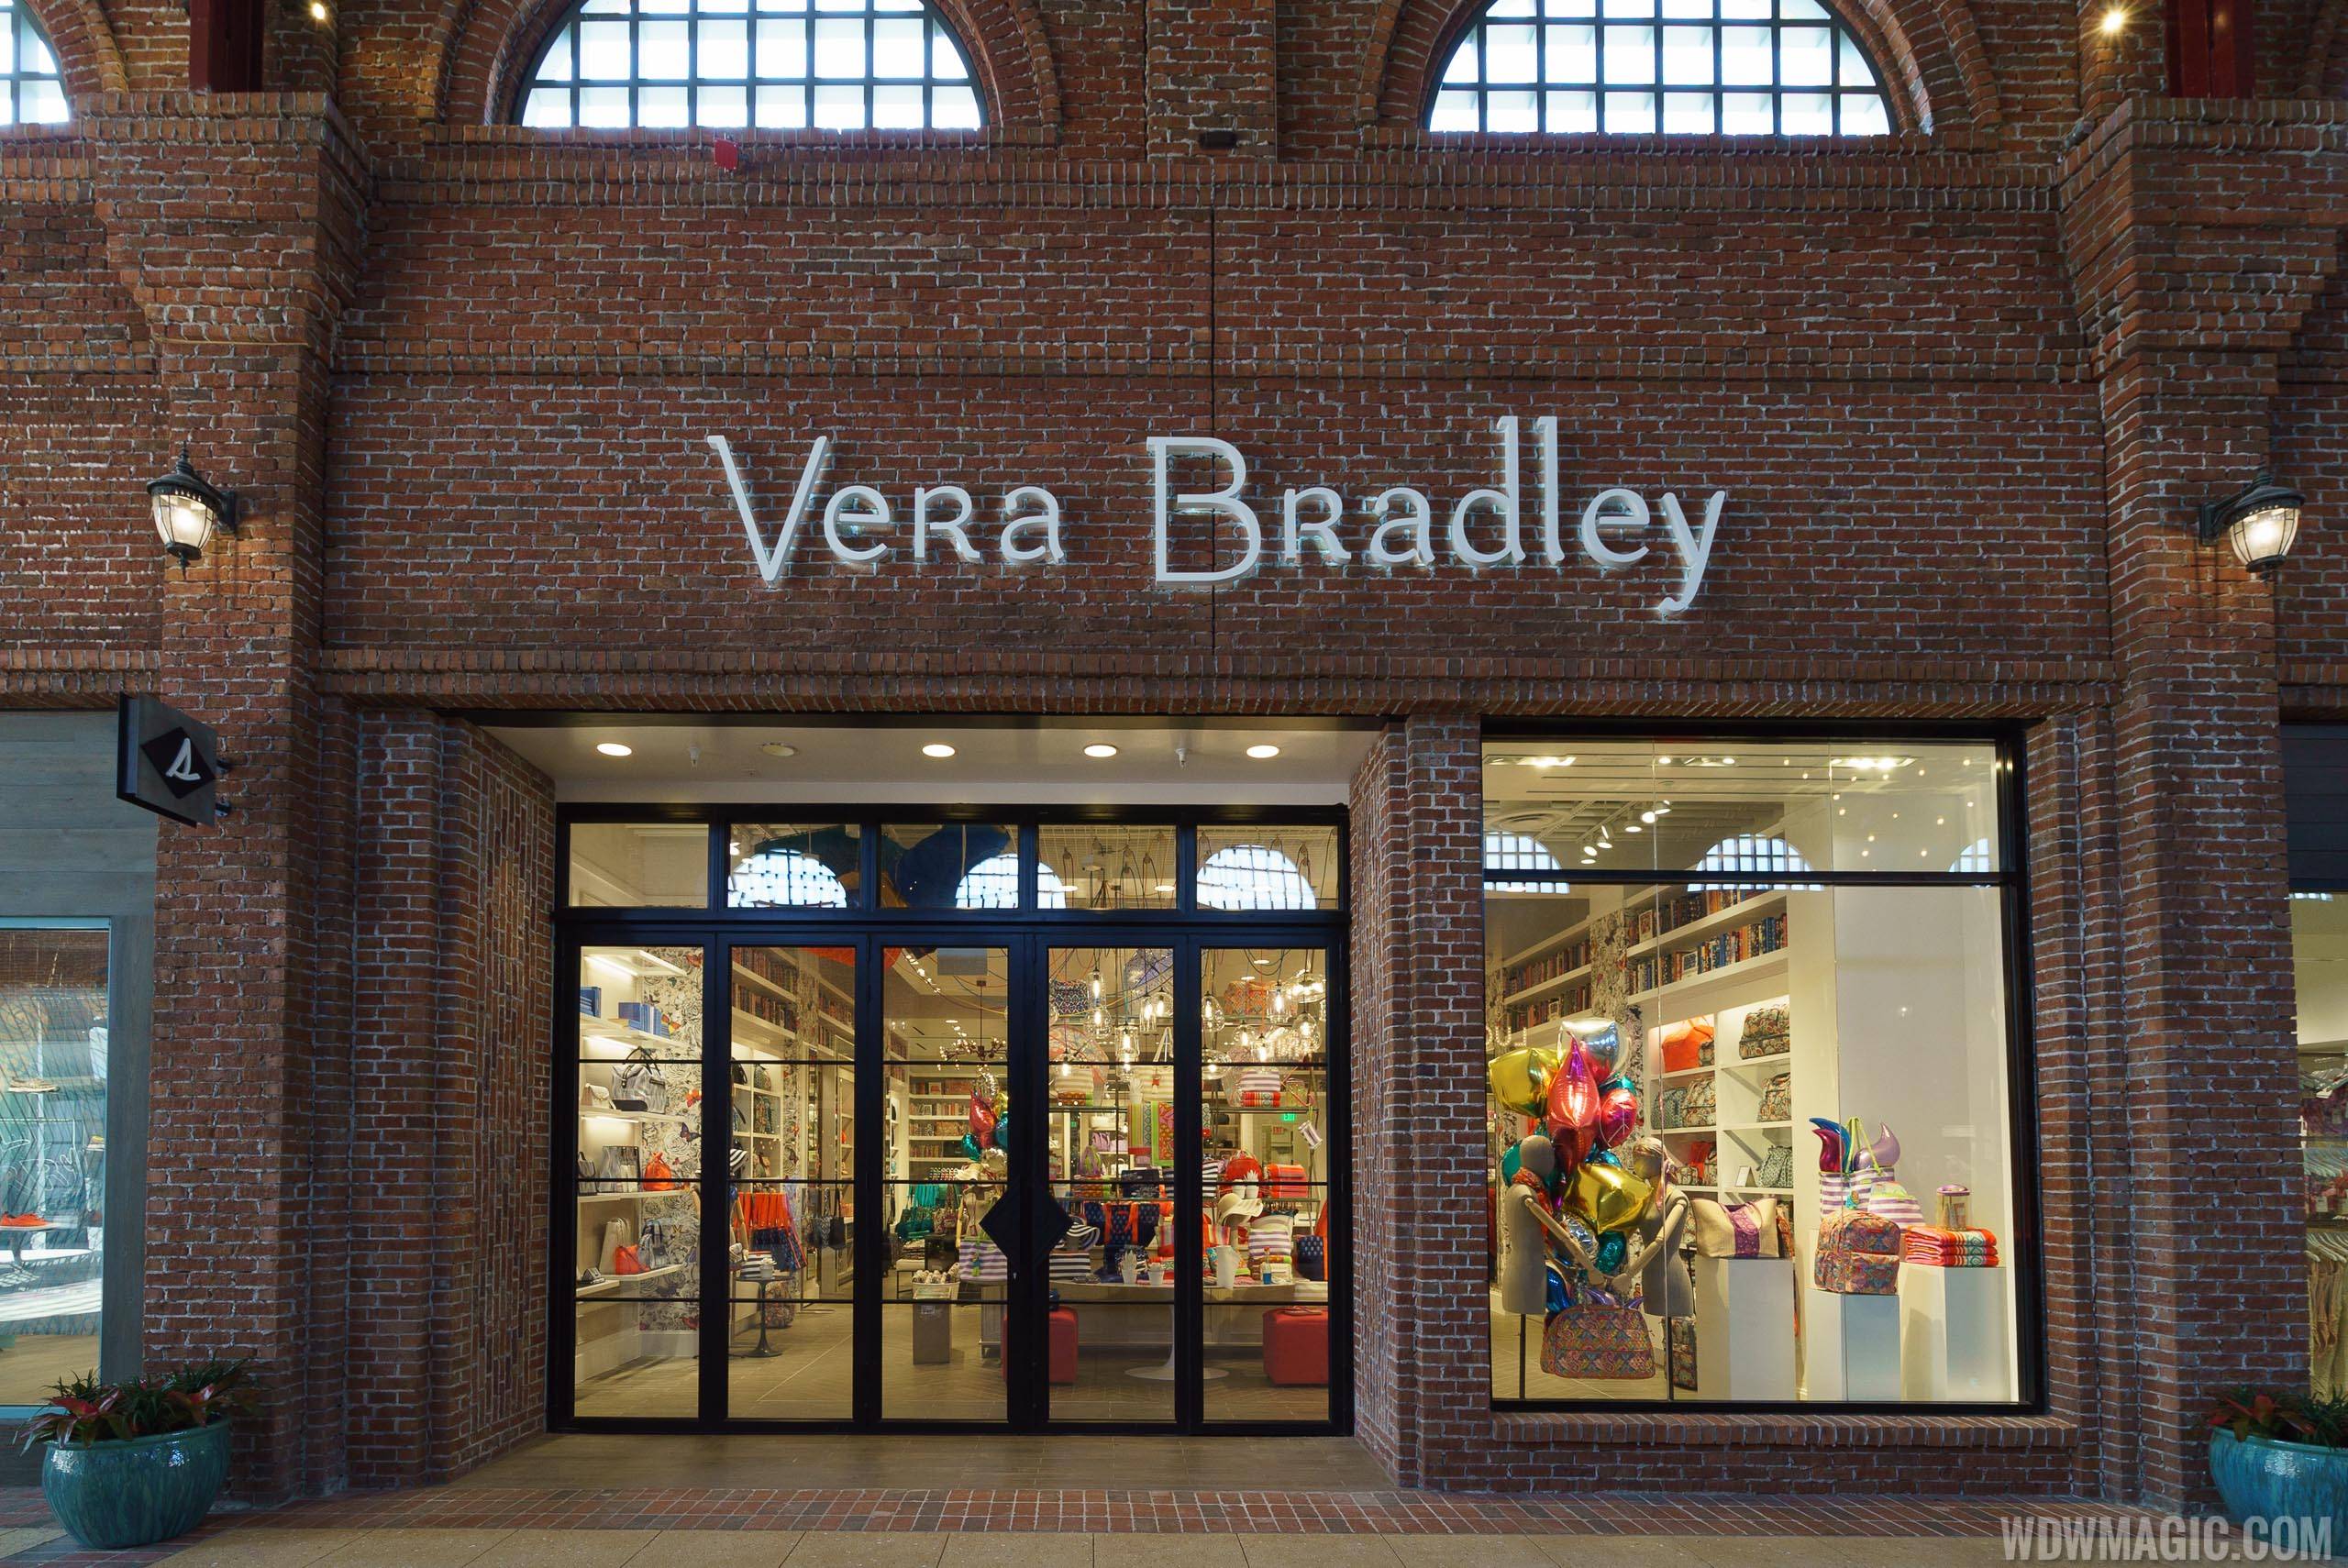 Vera Bradley at Disney Springs - Store front